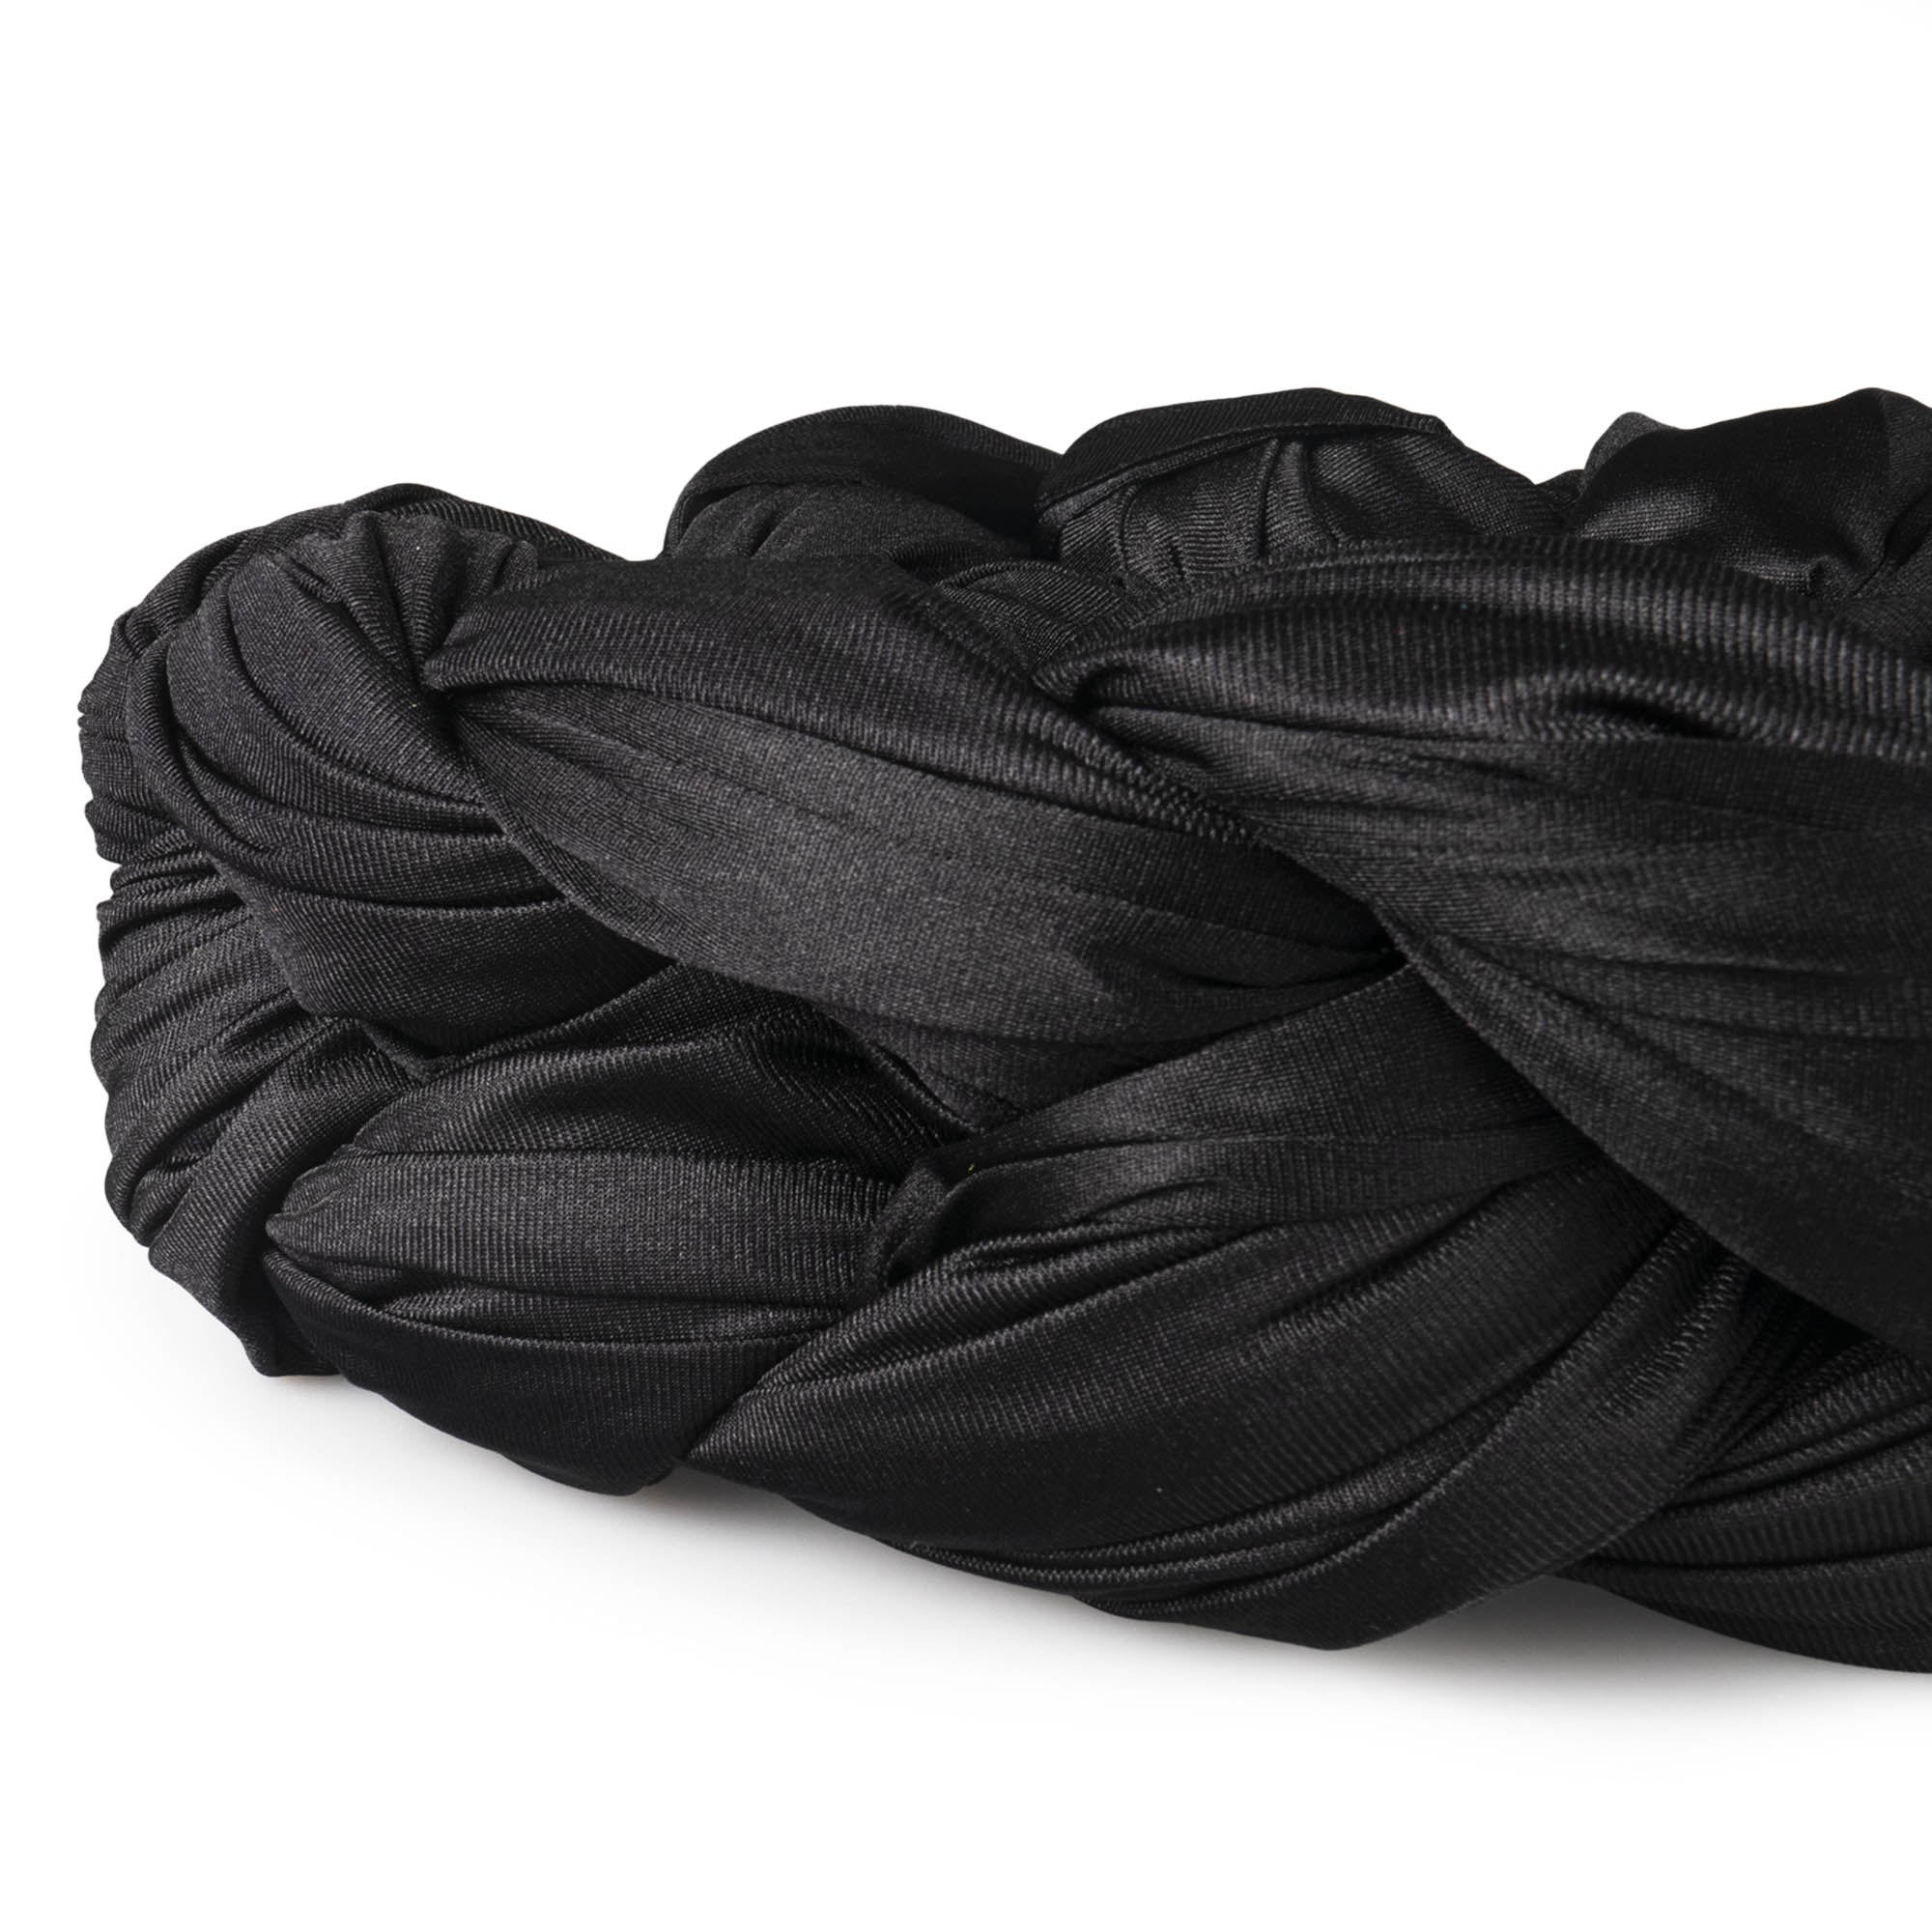 Black silk coiled